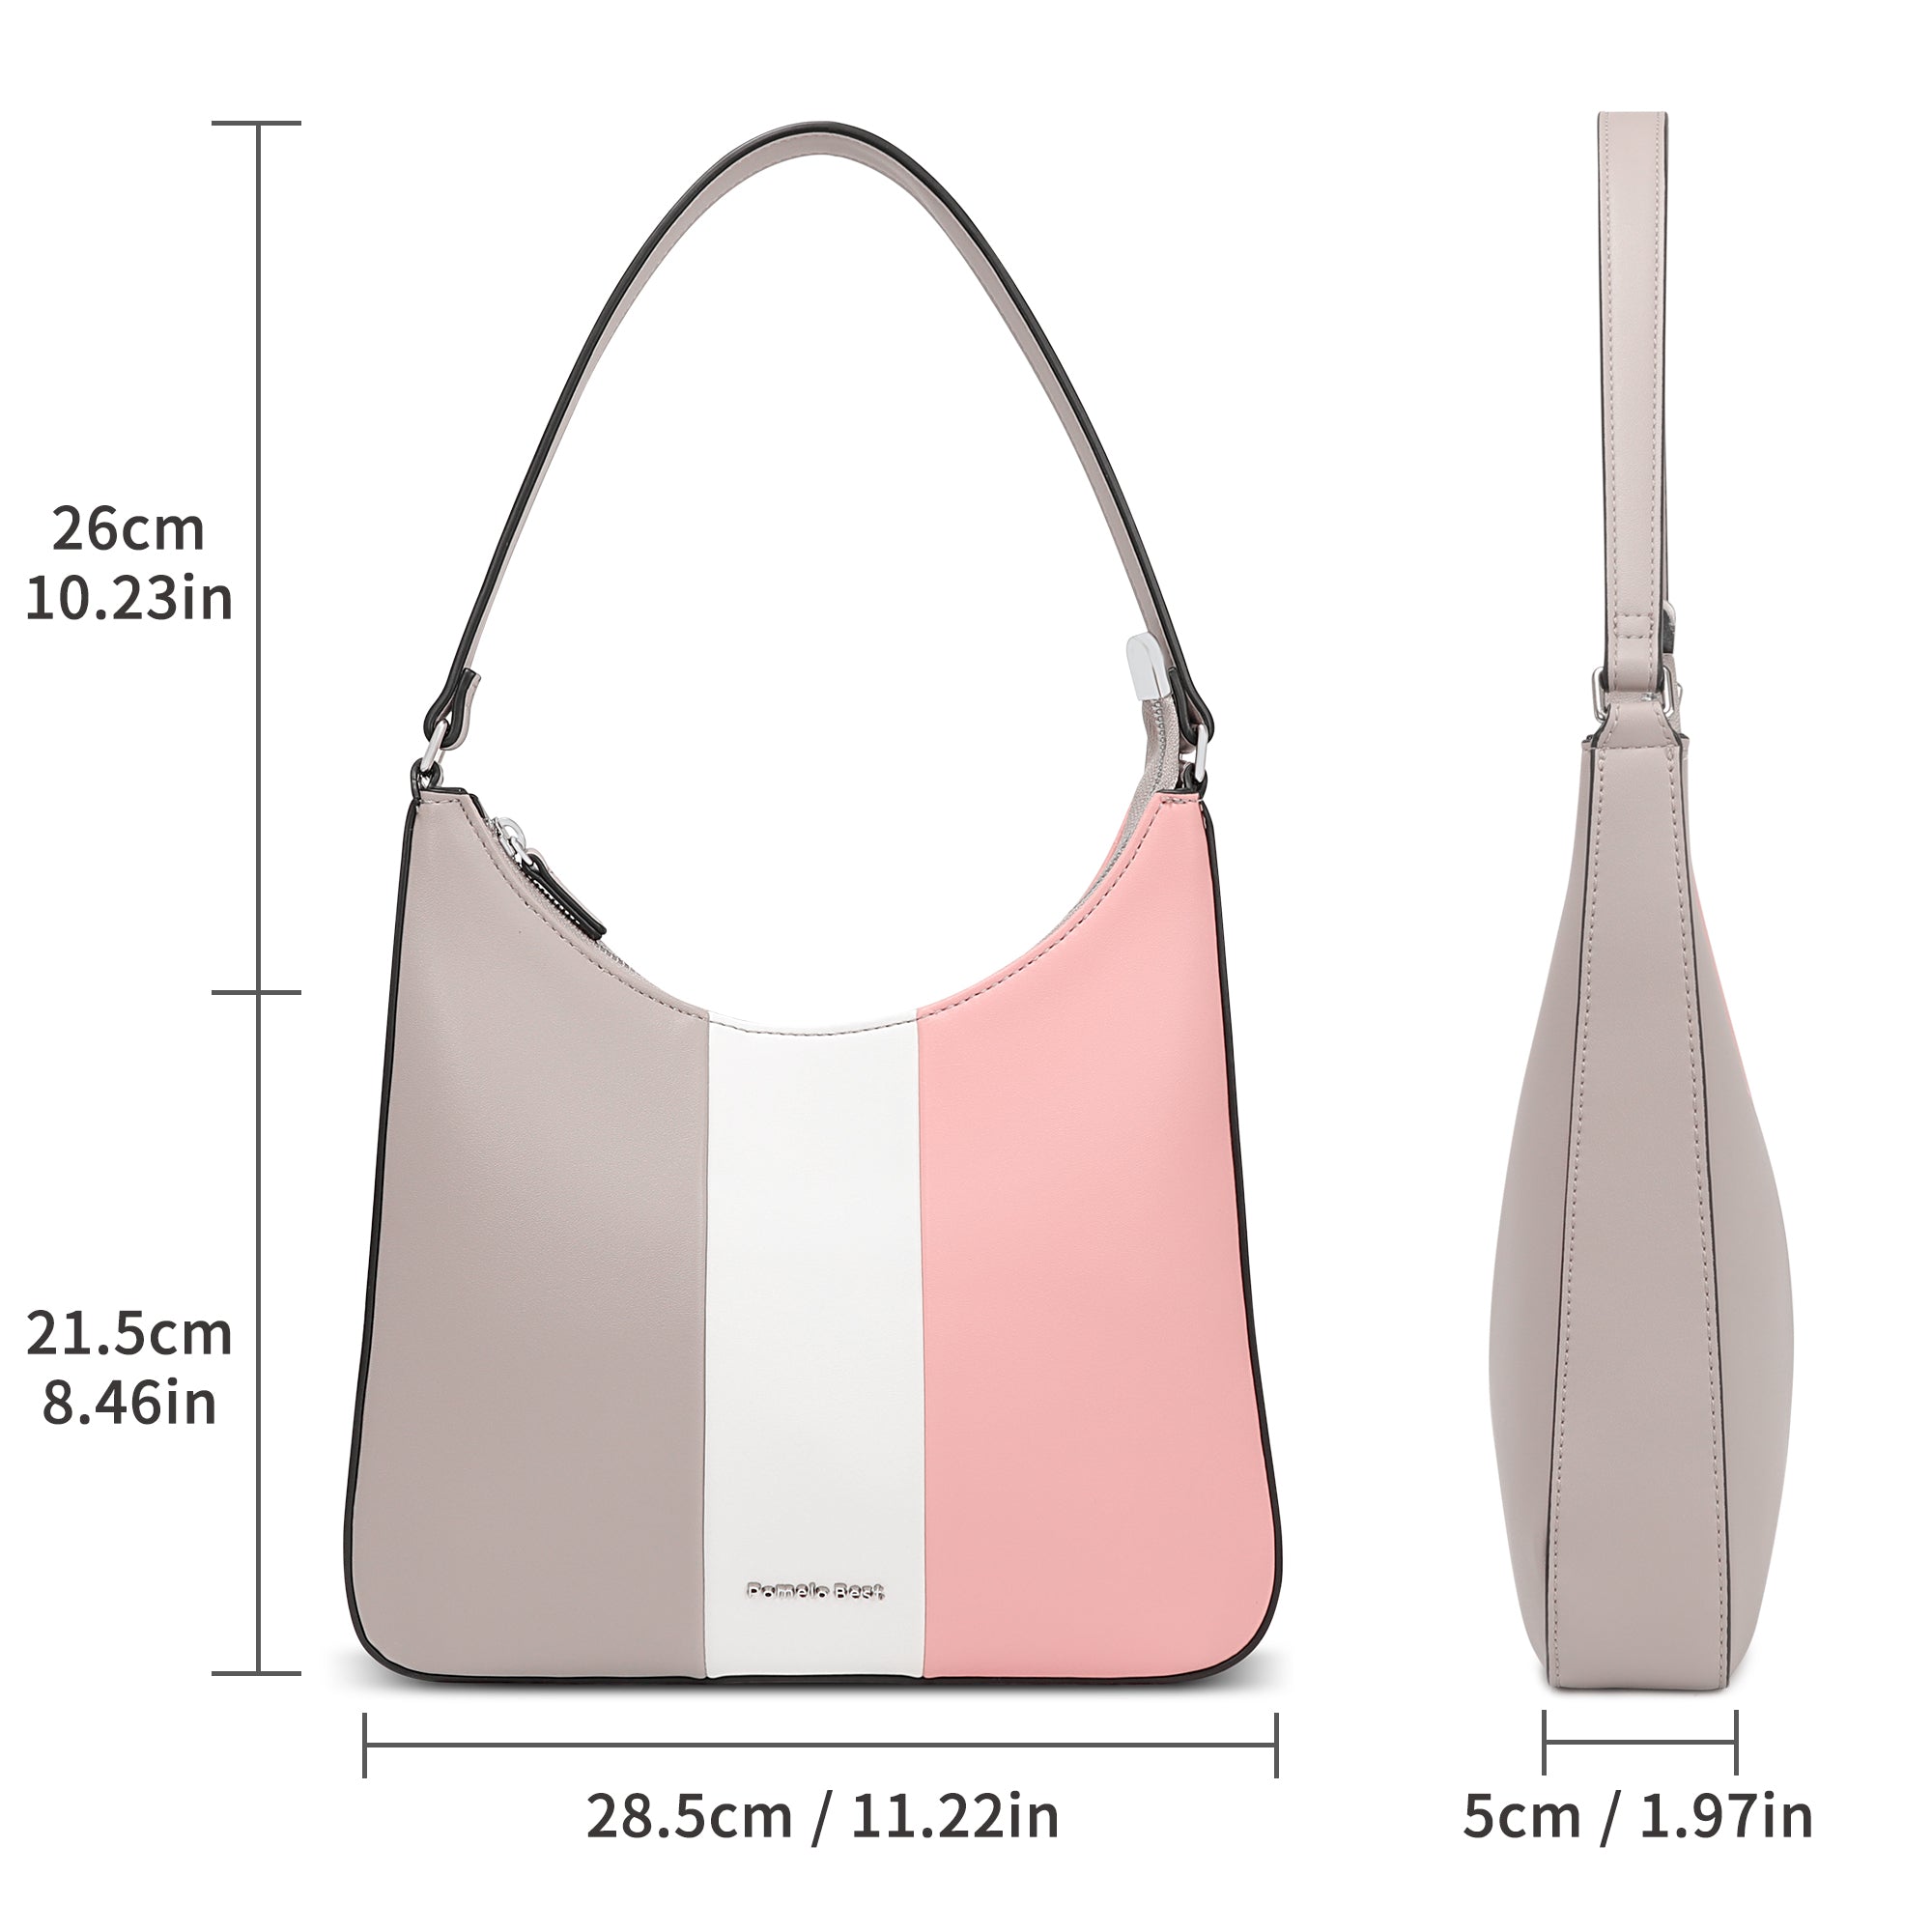 Hobo Bag with Neapolitan Ice Cream Colour Combination-Grey/White/Pink